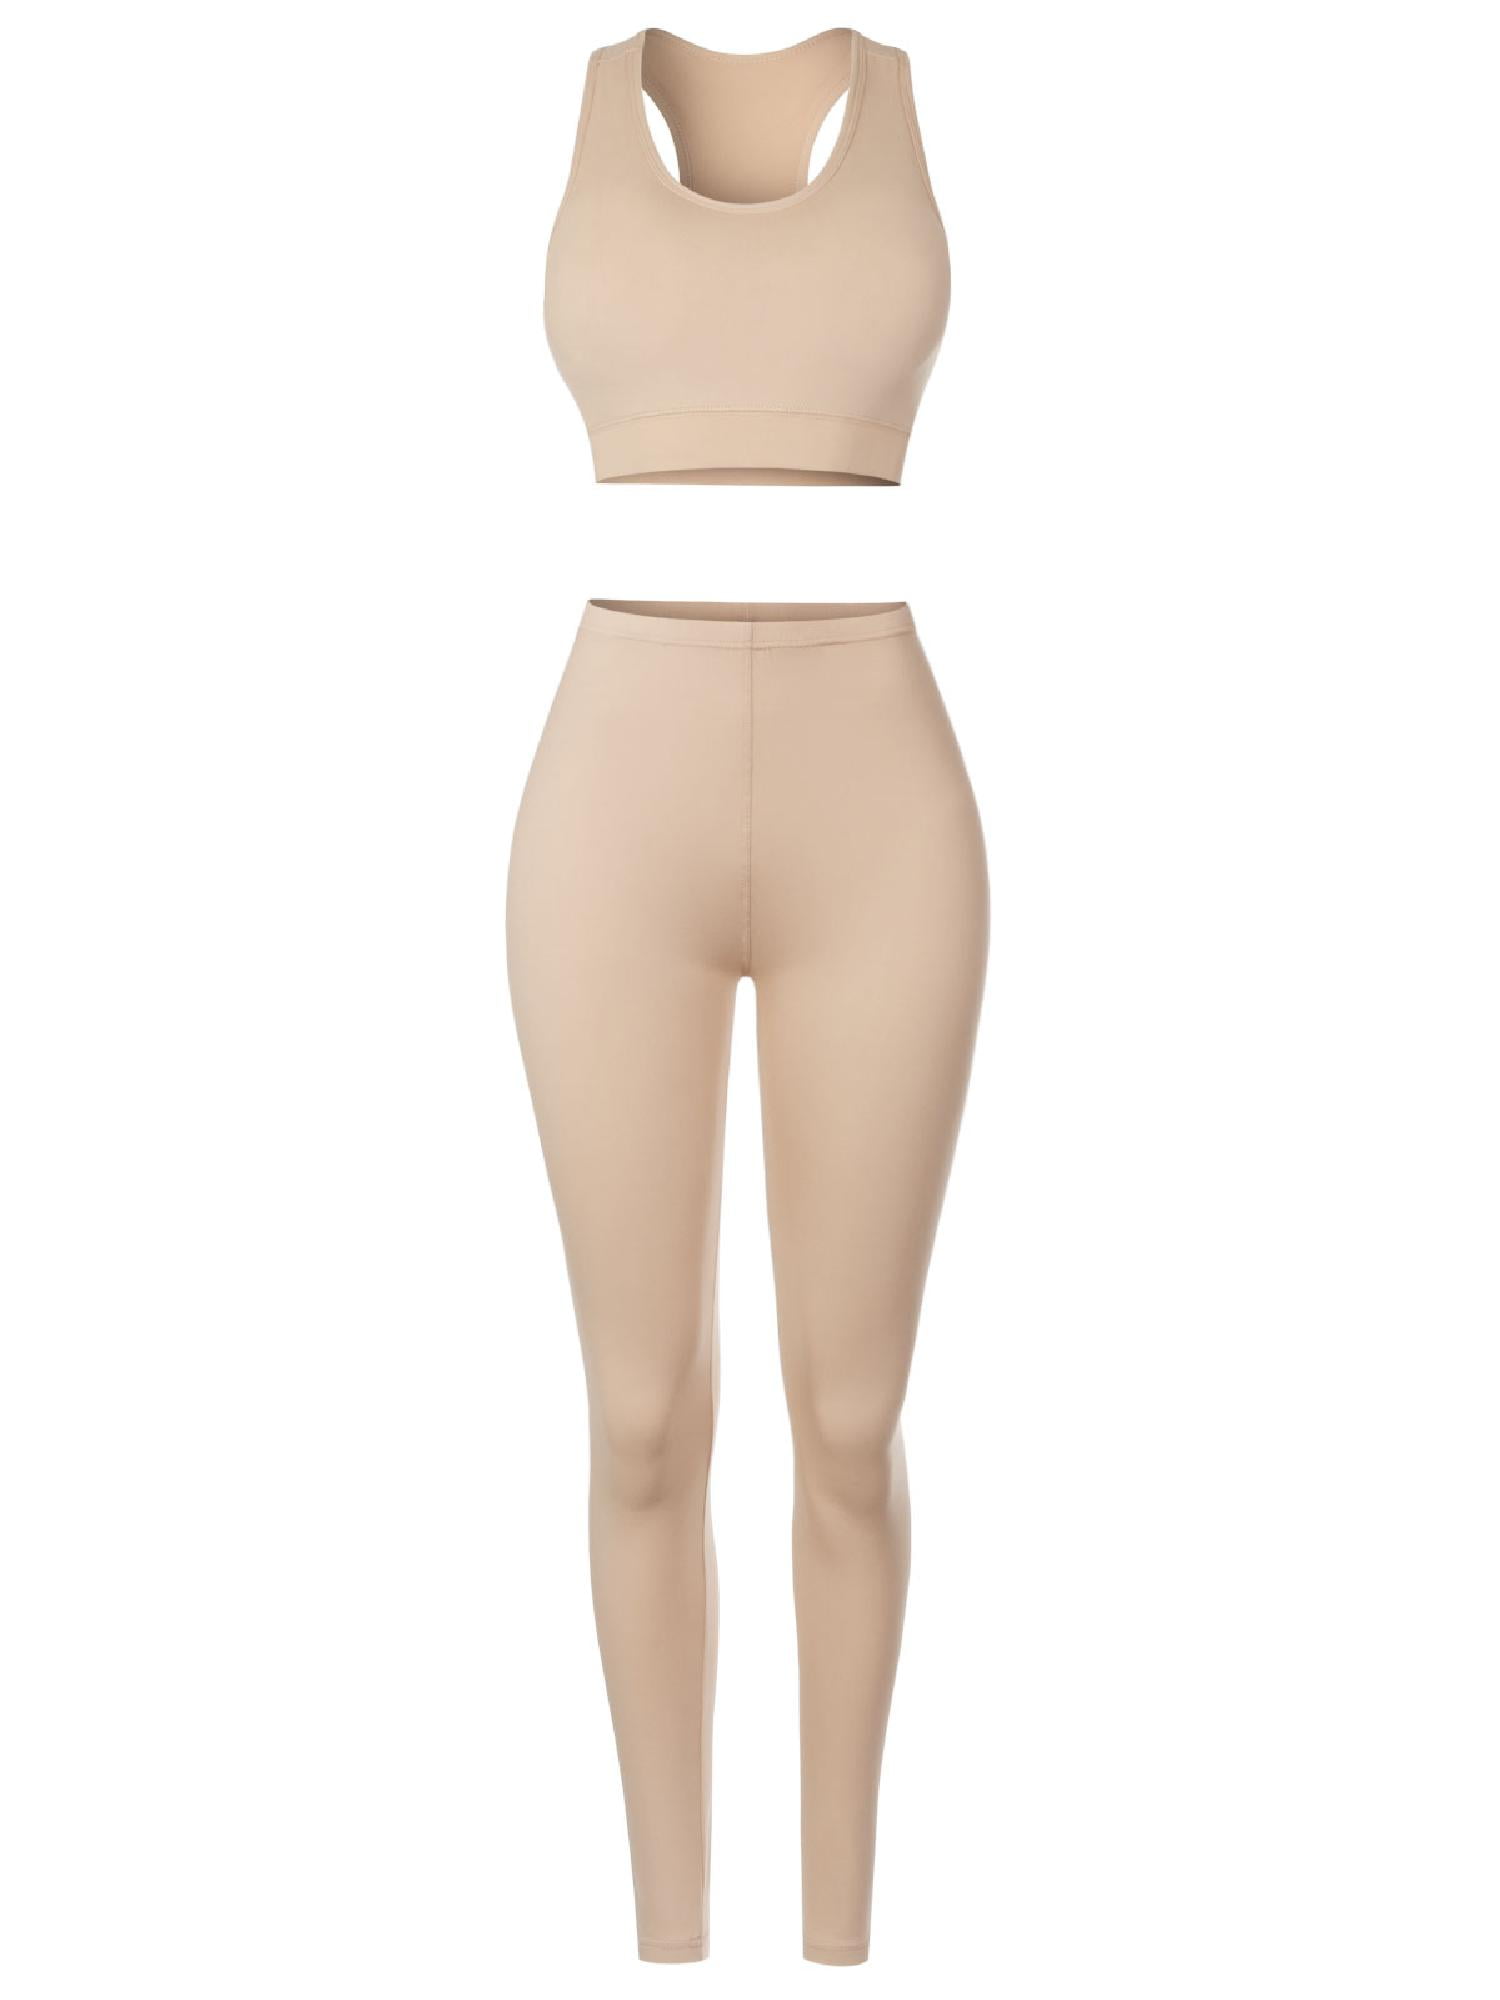 Buy BenCreative Women's Sportswear Wear 2Pc Sets Fashion Vest Leggings  Stretch Fit Yoga Solid Color Gym Wear Set S S orangered at